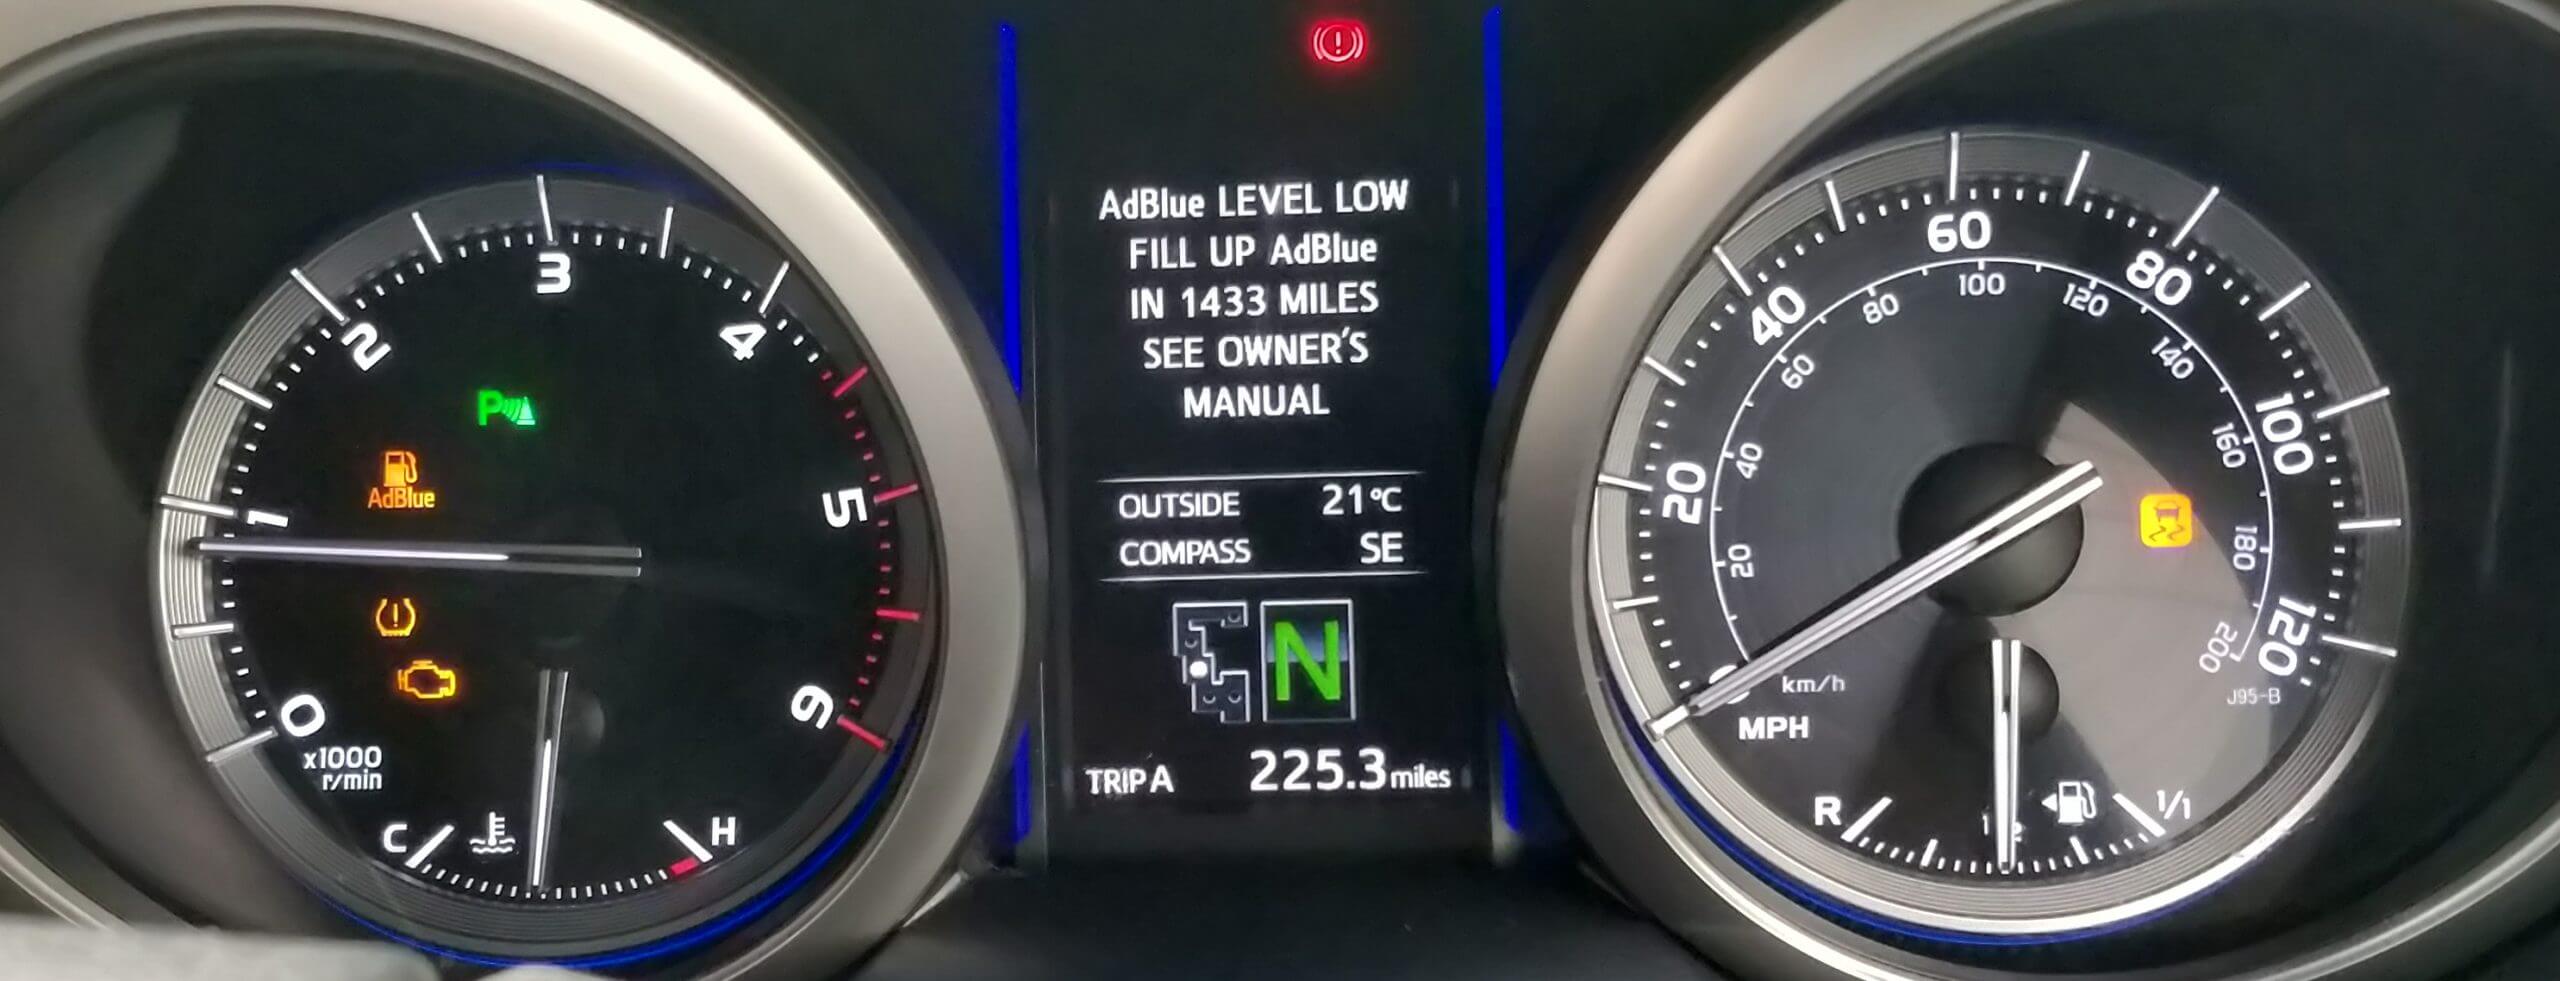 Toyota Adblue Fluid